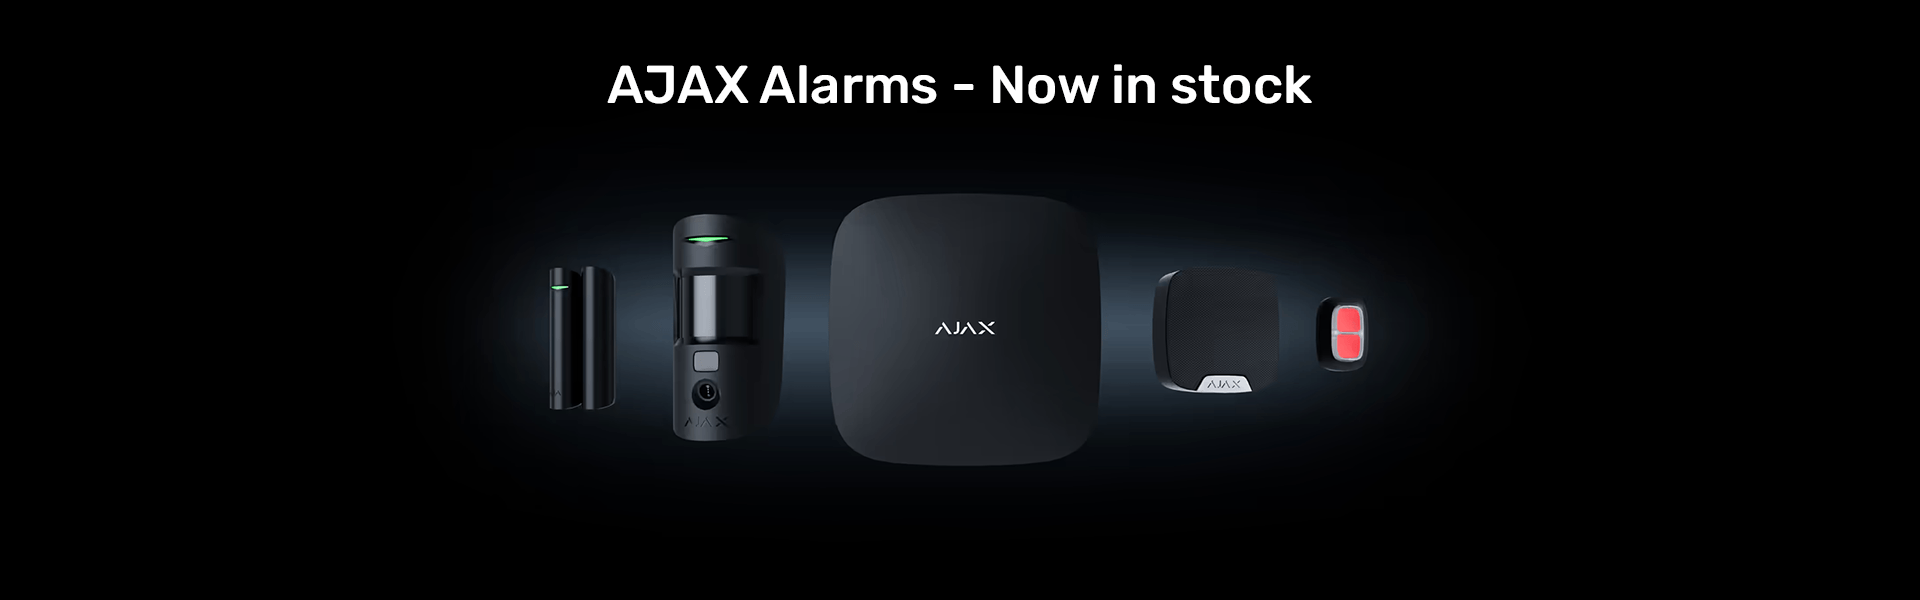 Ajax Alarms